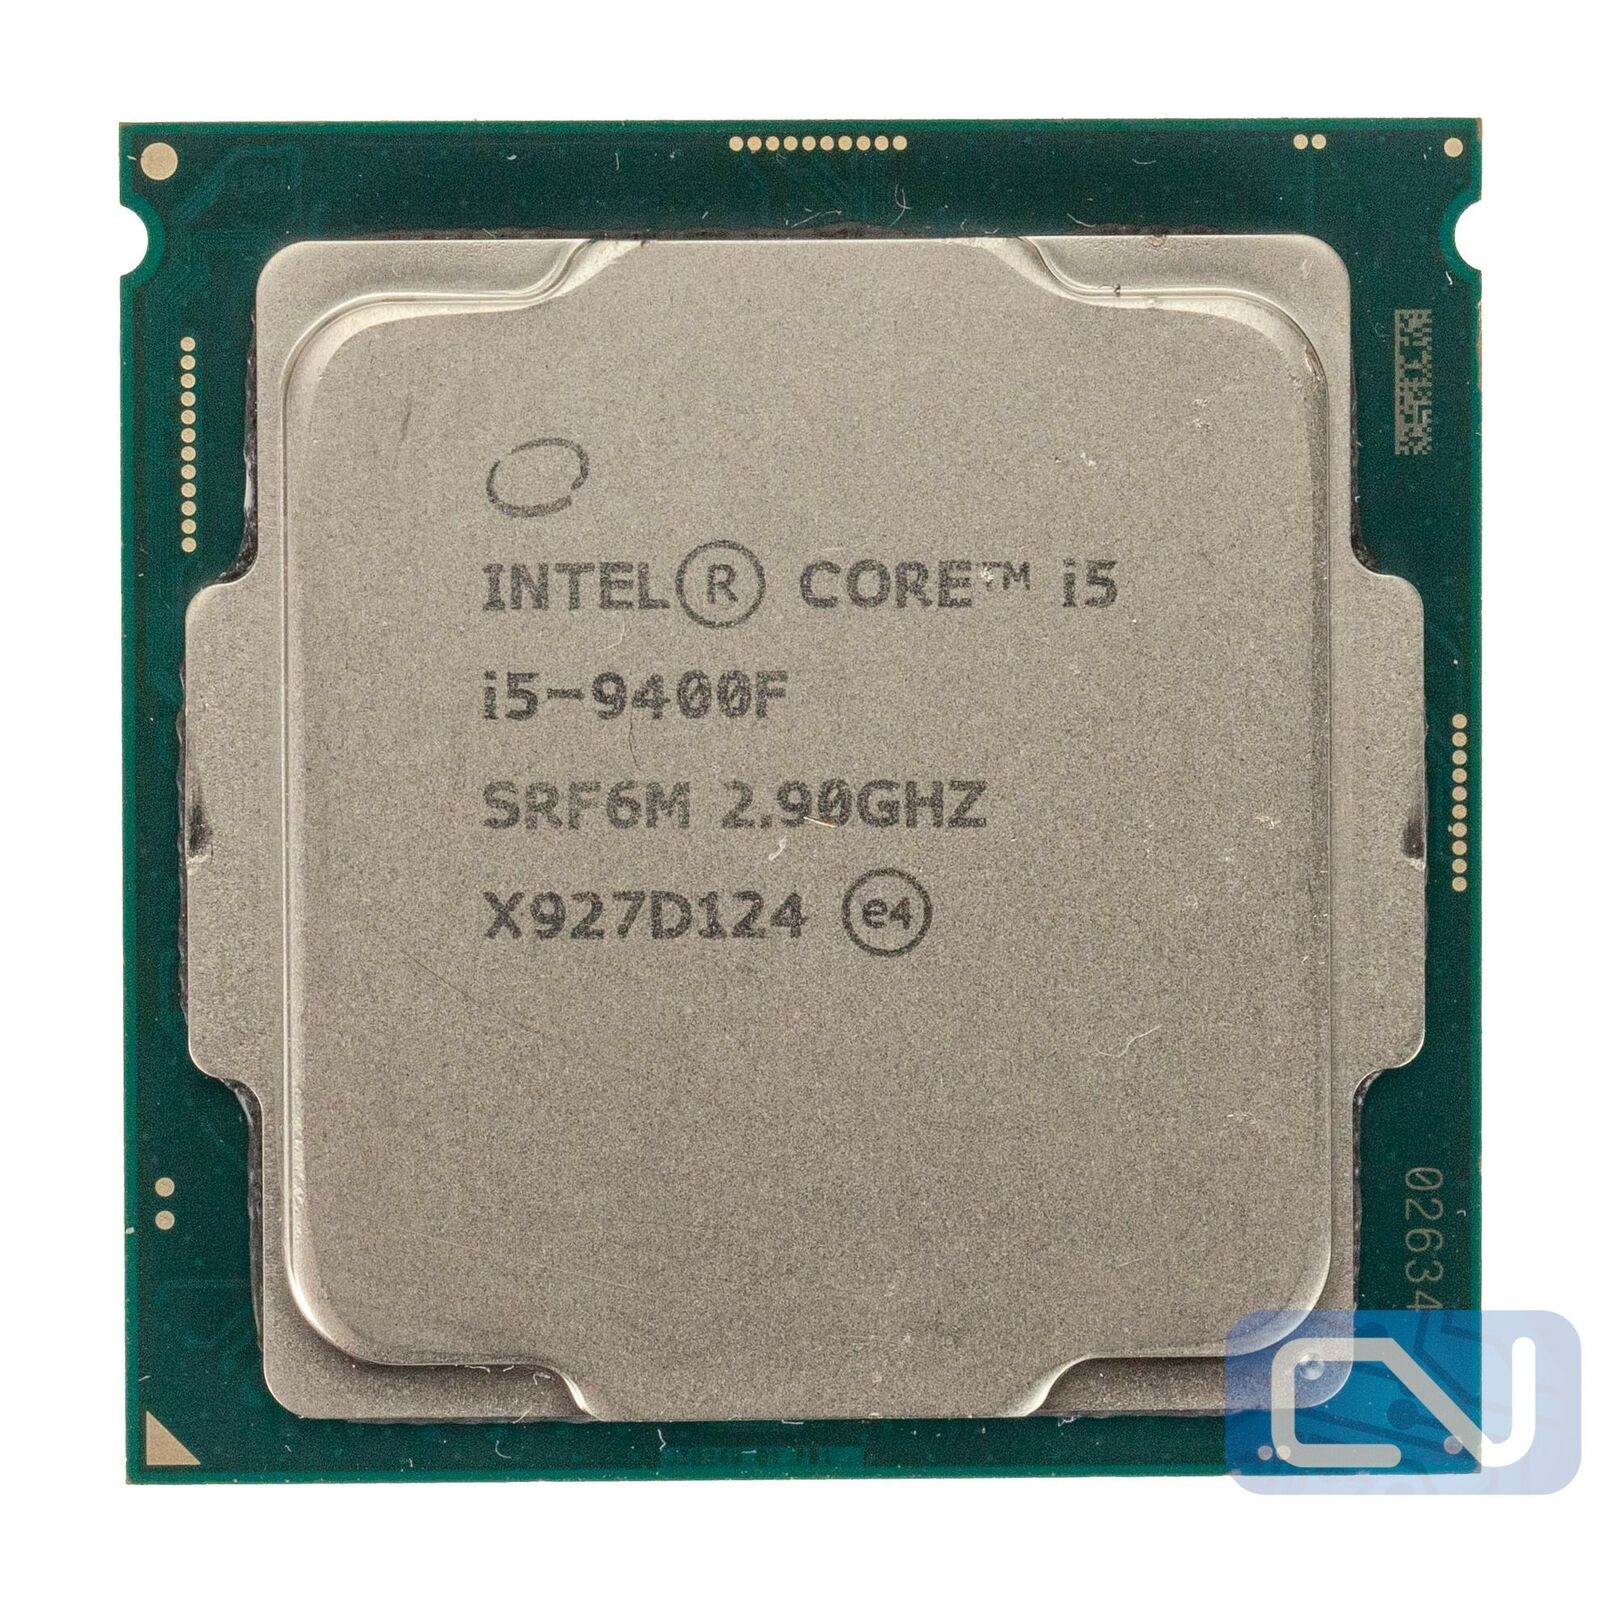 intel core i5 2400 (